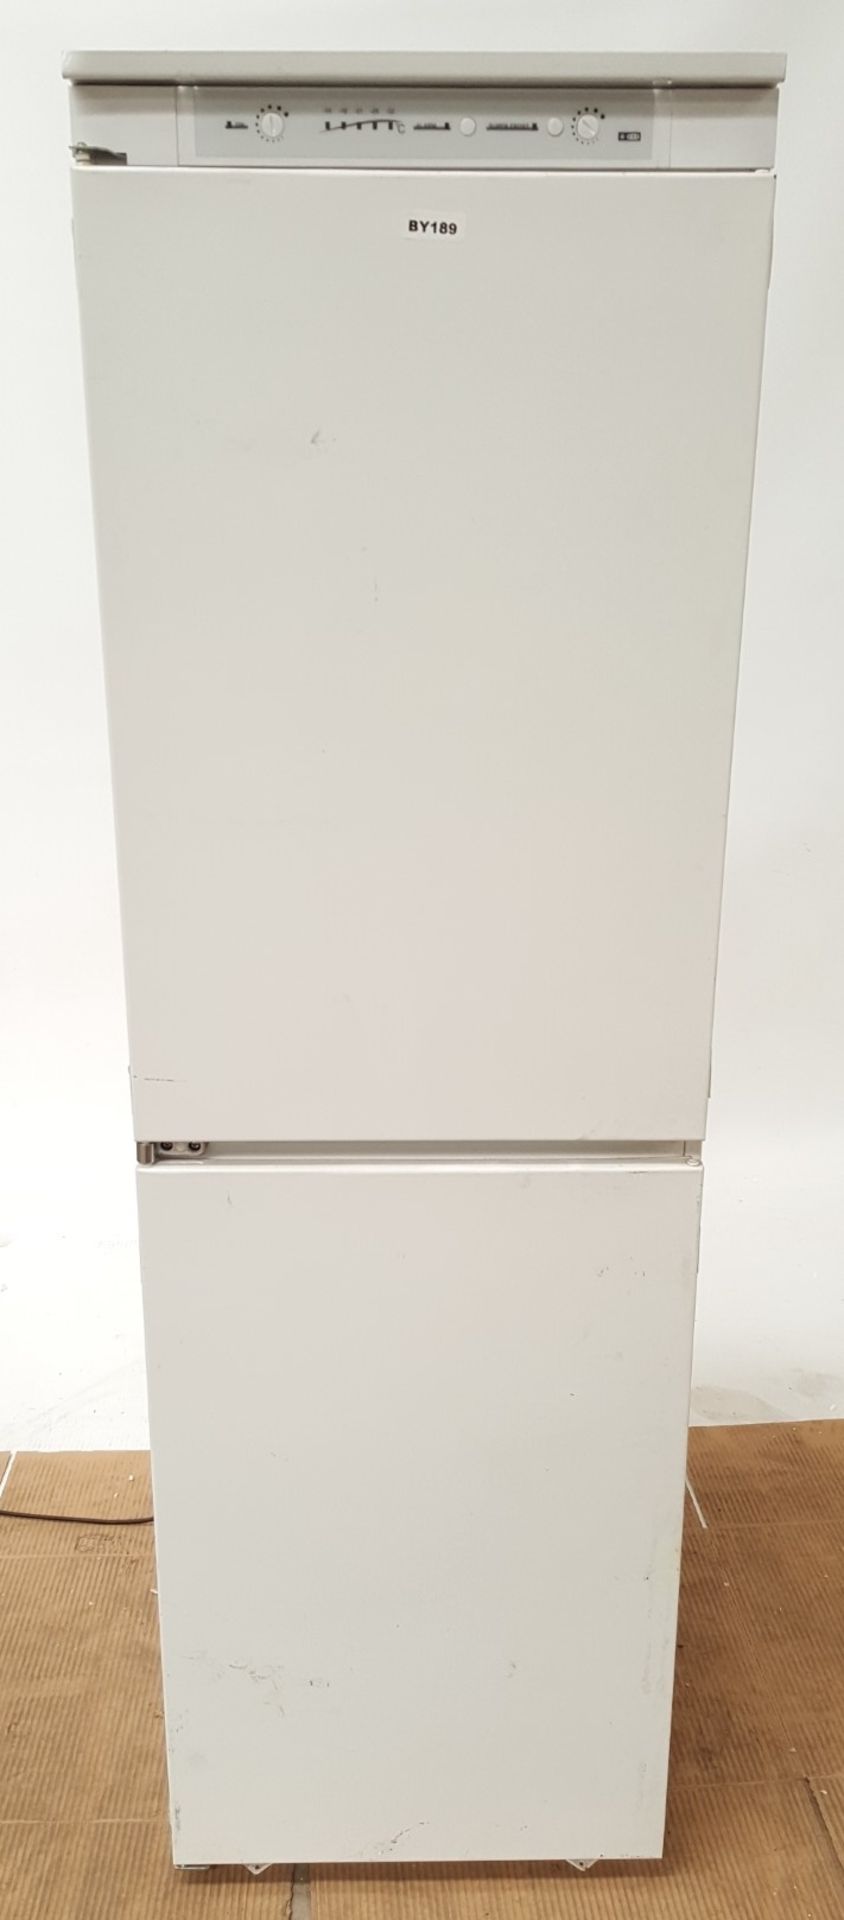 1 x Prima Integrated 60/40 Frost Free Fridge Freezer LPR356A1 - Ref BY189